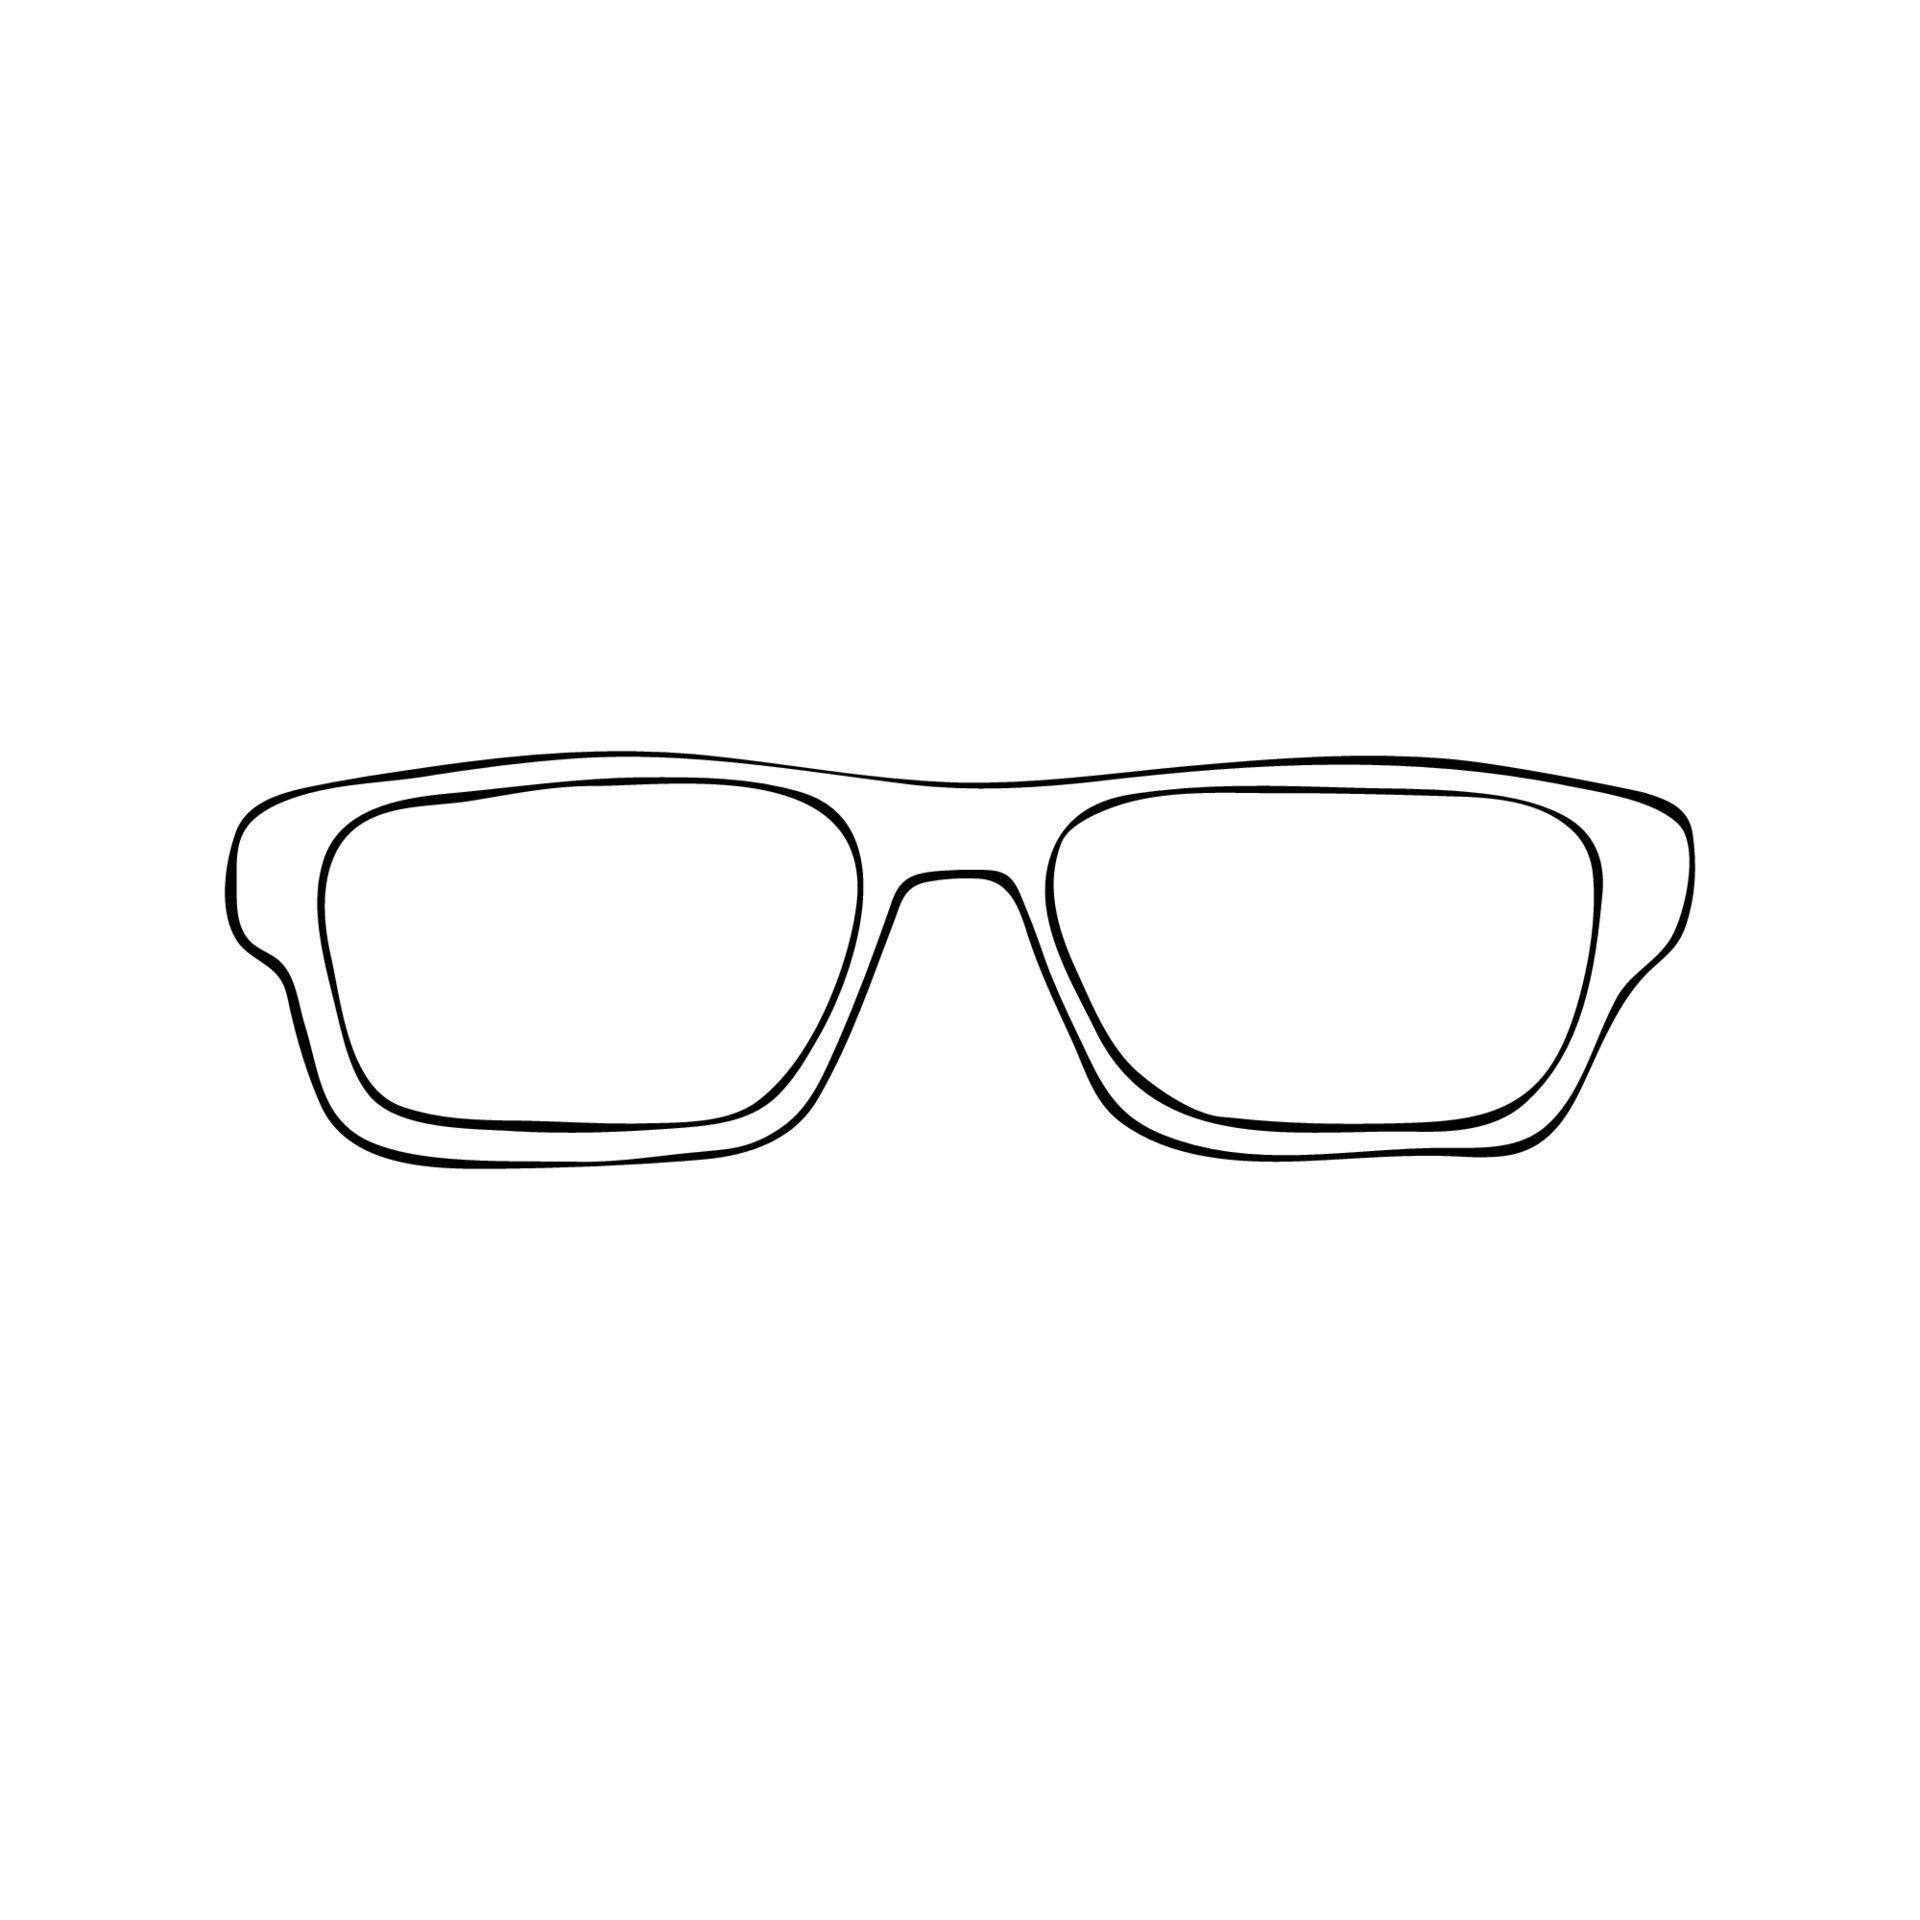 Black doodle glasses. Eyeglasses and sunglasses illustration 4450010 ...